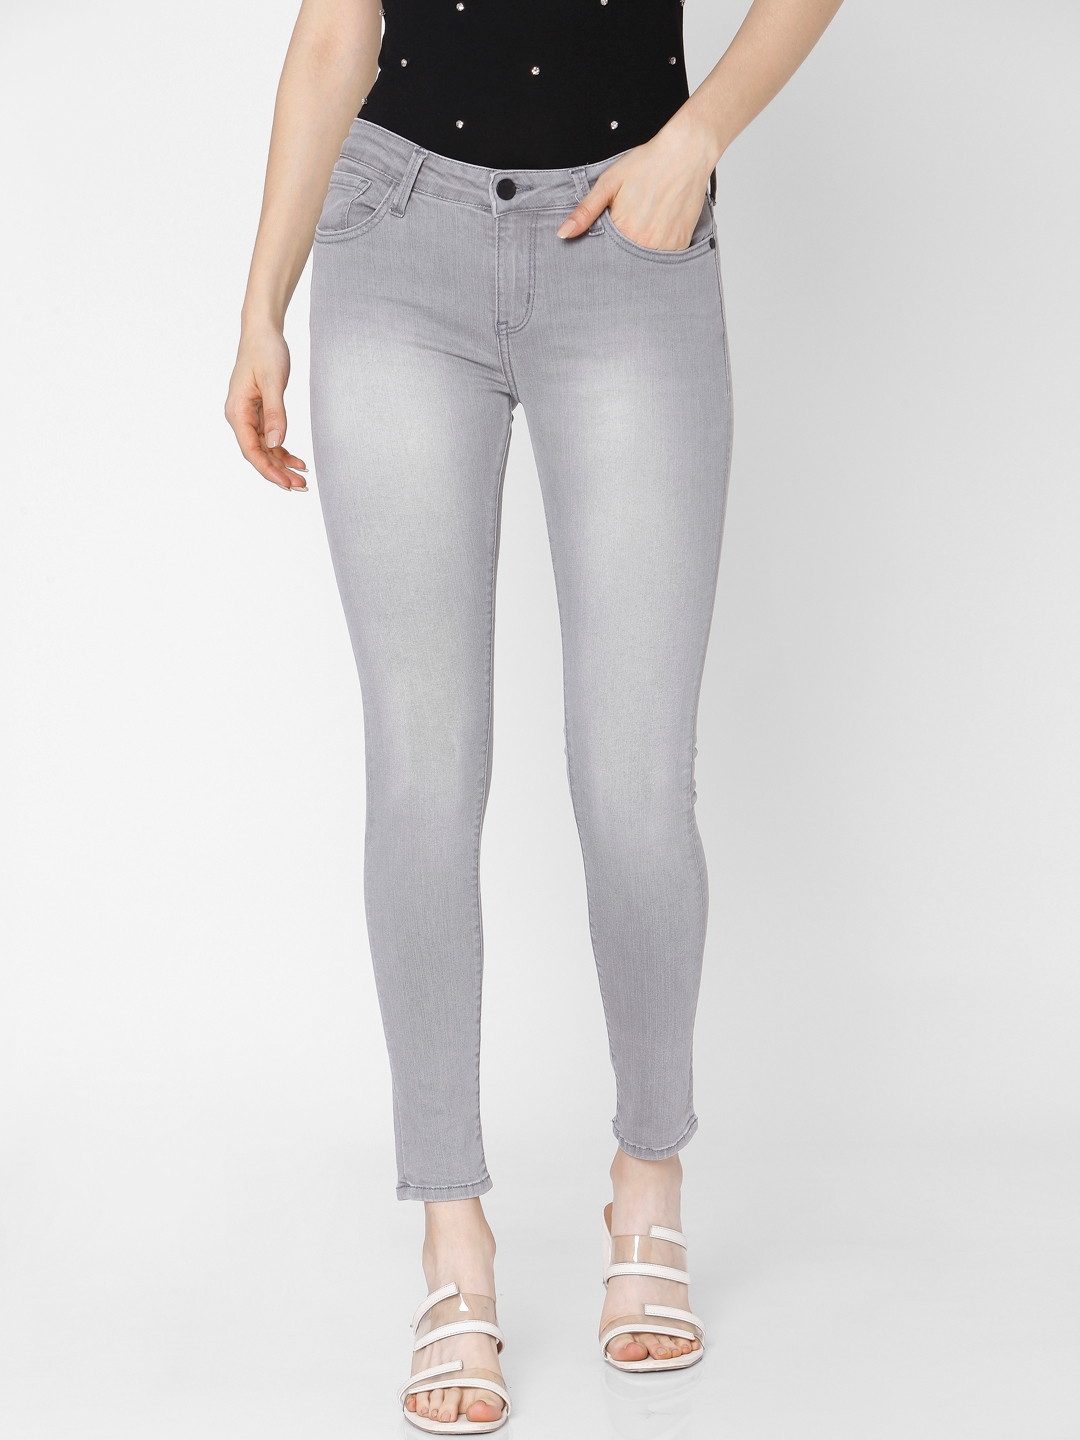 Spykar | Women's Grey Cotton Solid Skinny Jeans 1